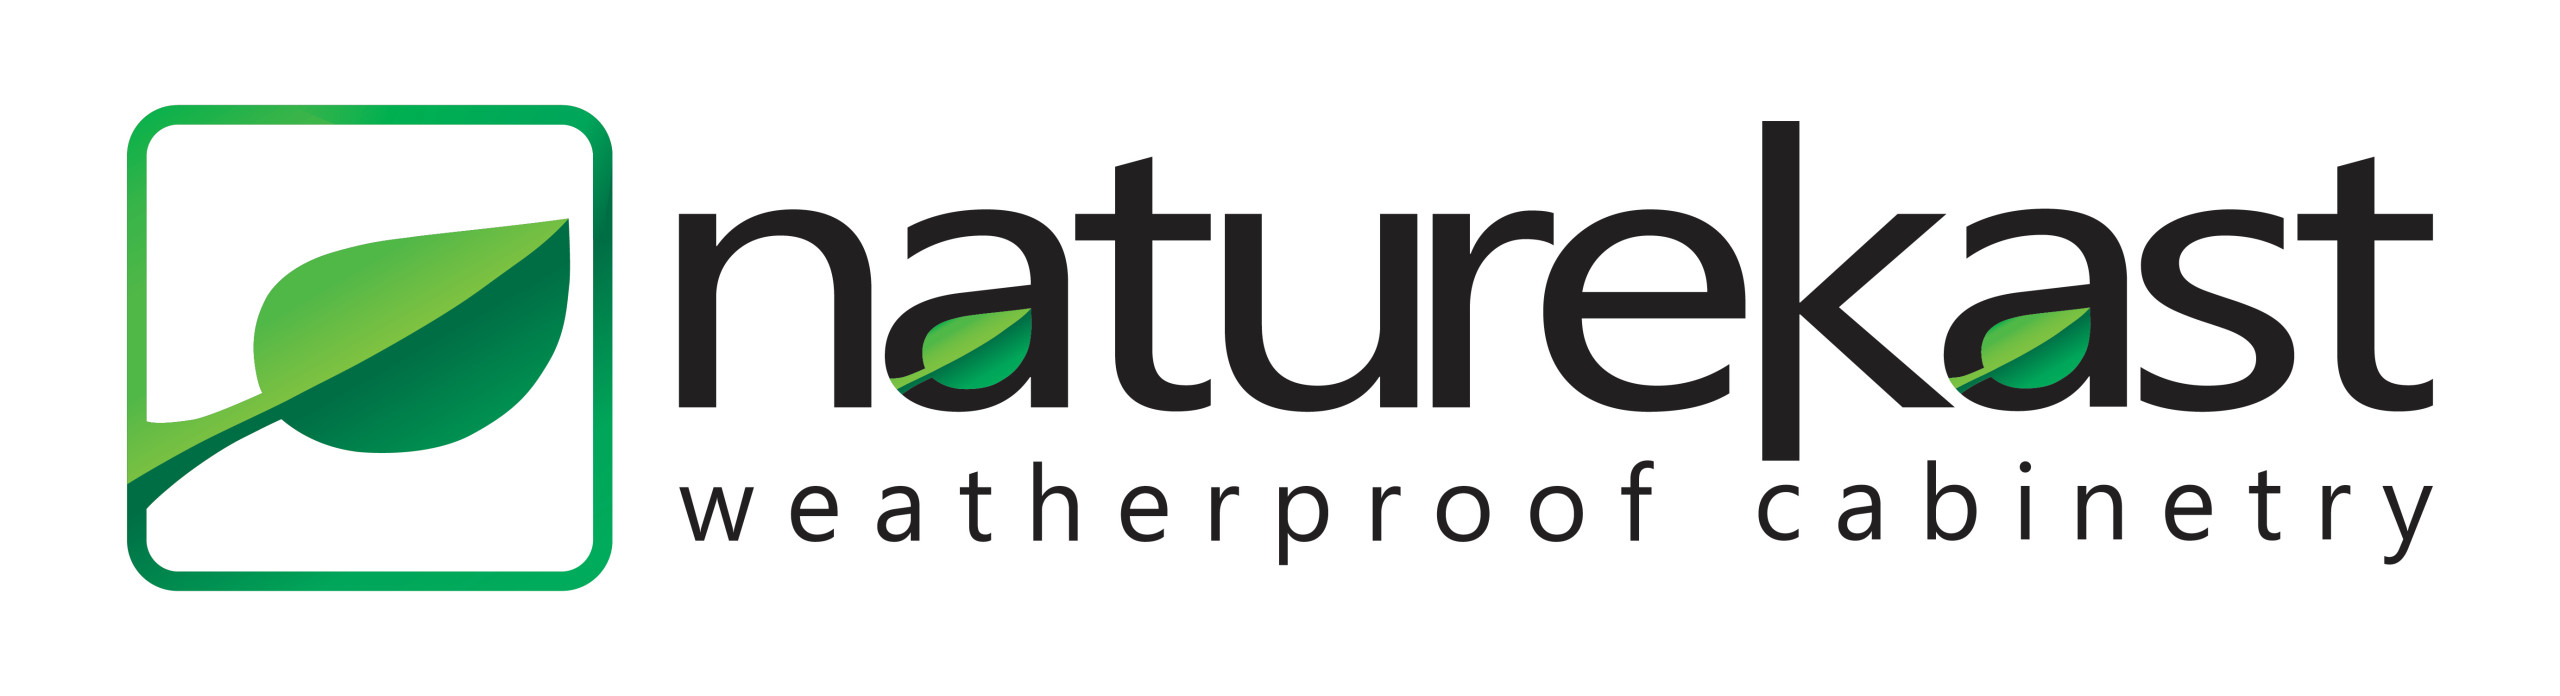 naturekast logo